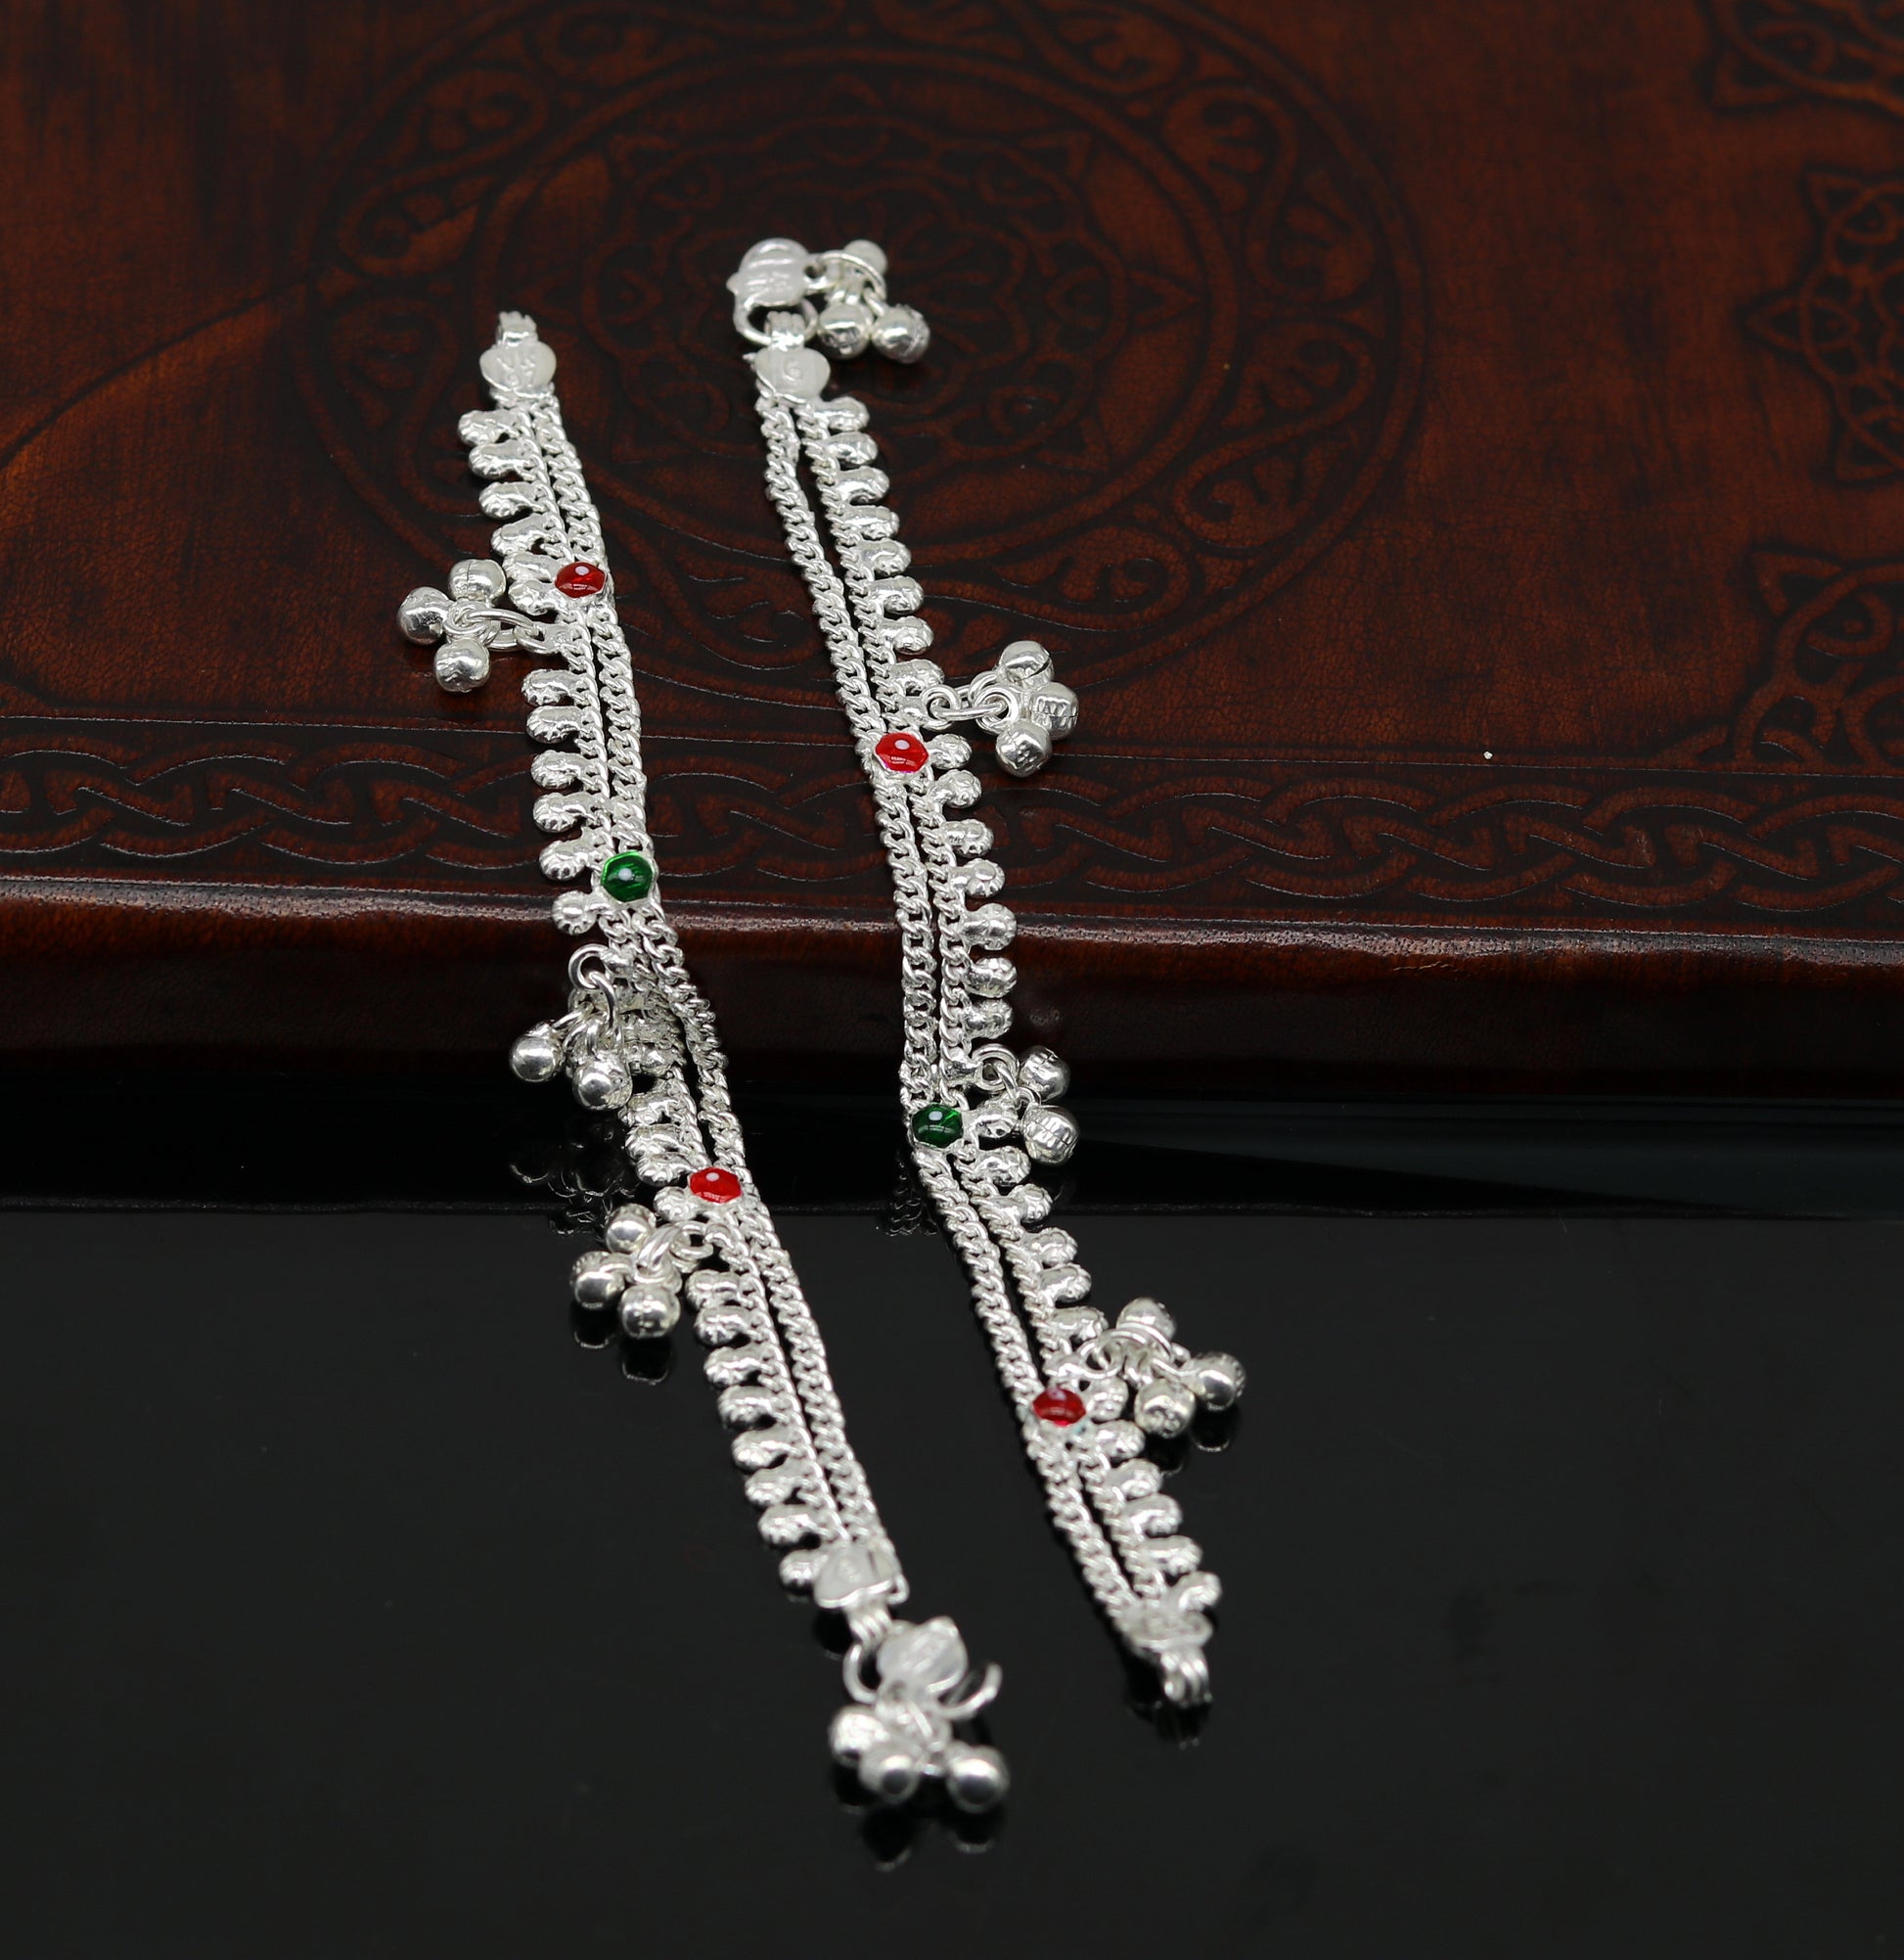 6" fancy stylish baby anklets bracelet, double chain jingle bells ankle bracelet, unisex gifting kids jewelry, new born baby jewelry ank257 - TRIBAL ORNAMENTS